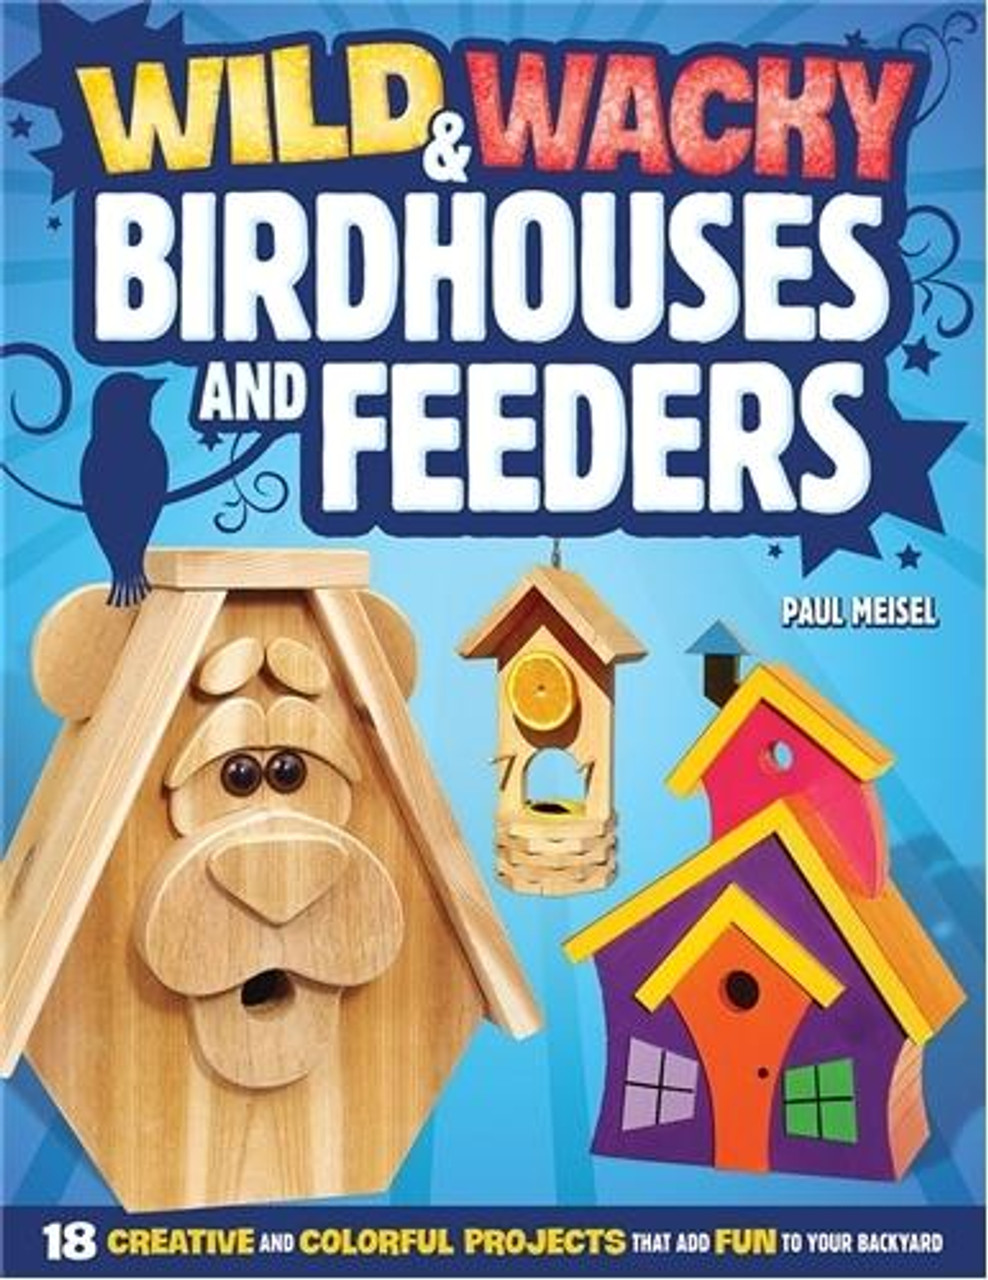 Premium Bird House, Birdhouse Kits for Kids